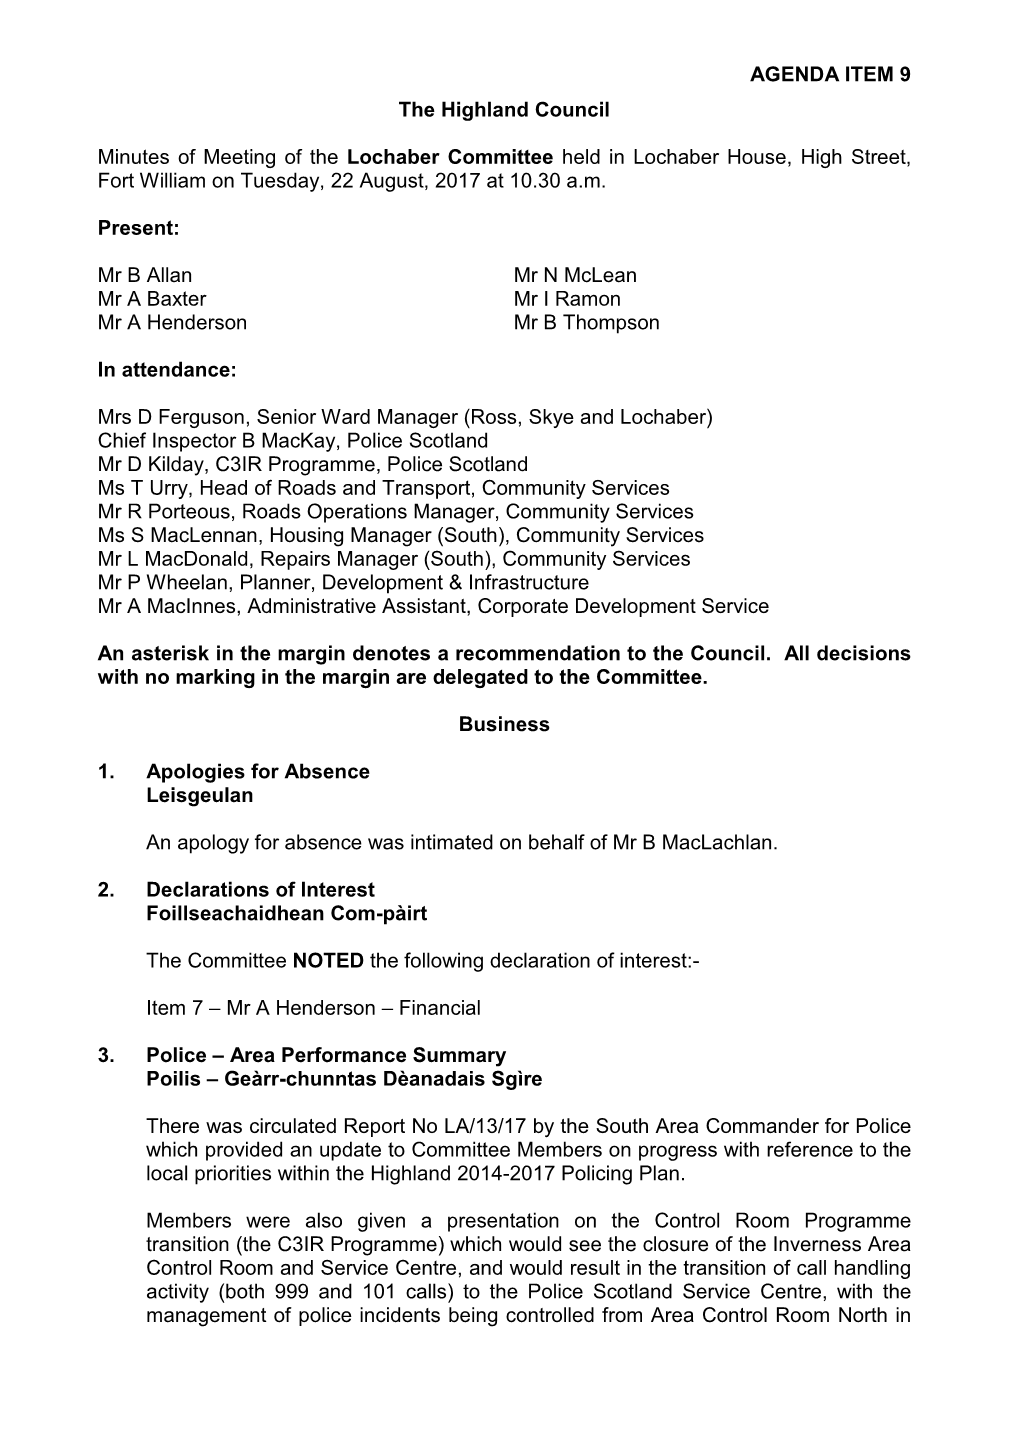 Item 9 Lochaber Committee Minutes